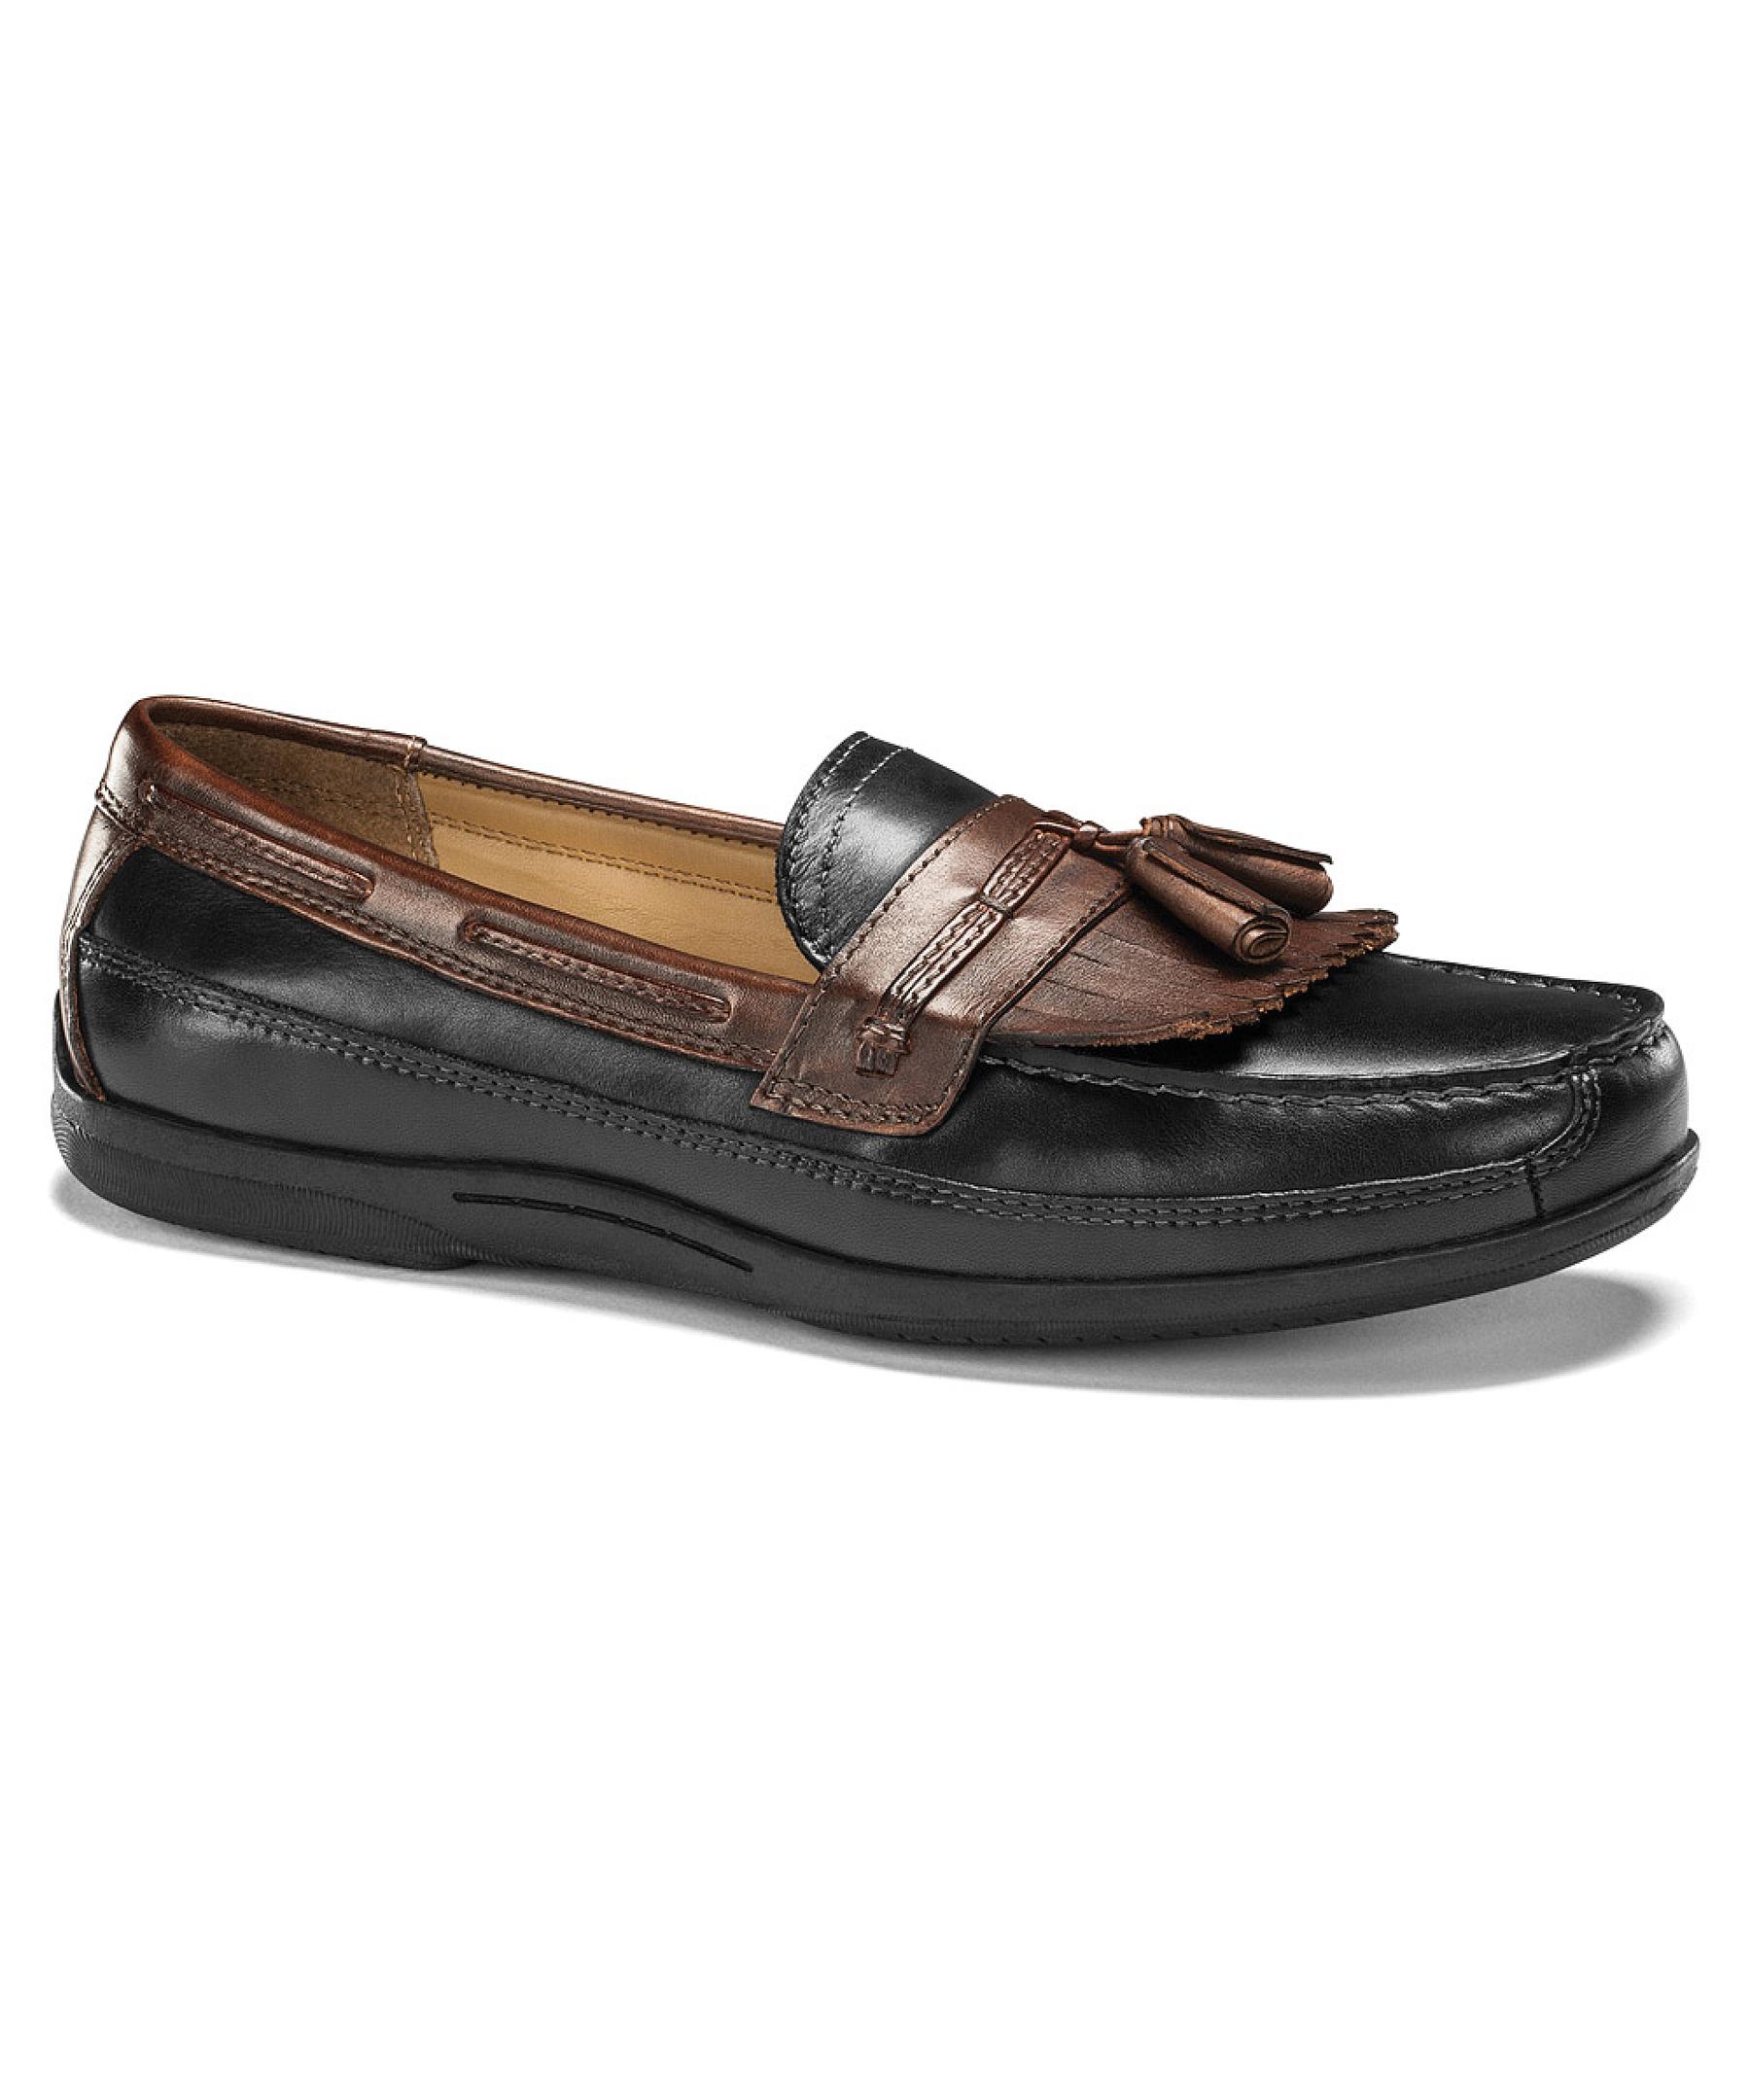 Lyst - Dockers Men's Hamlin Loafers Shoes in Black for Men